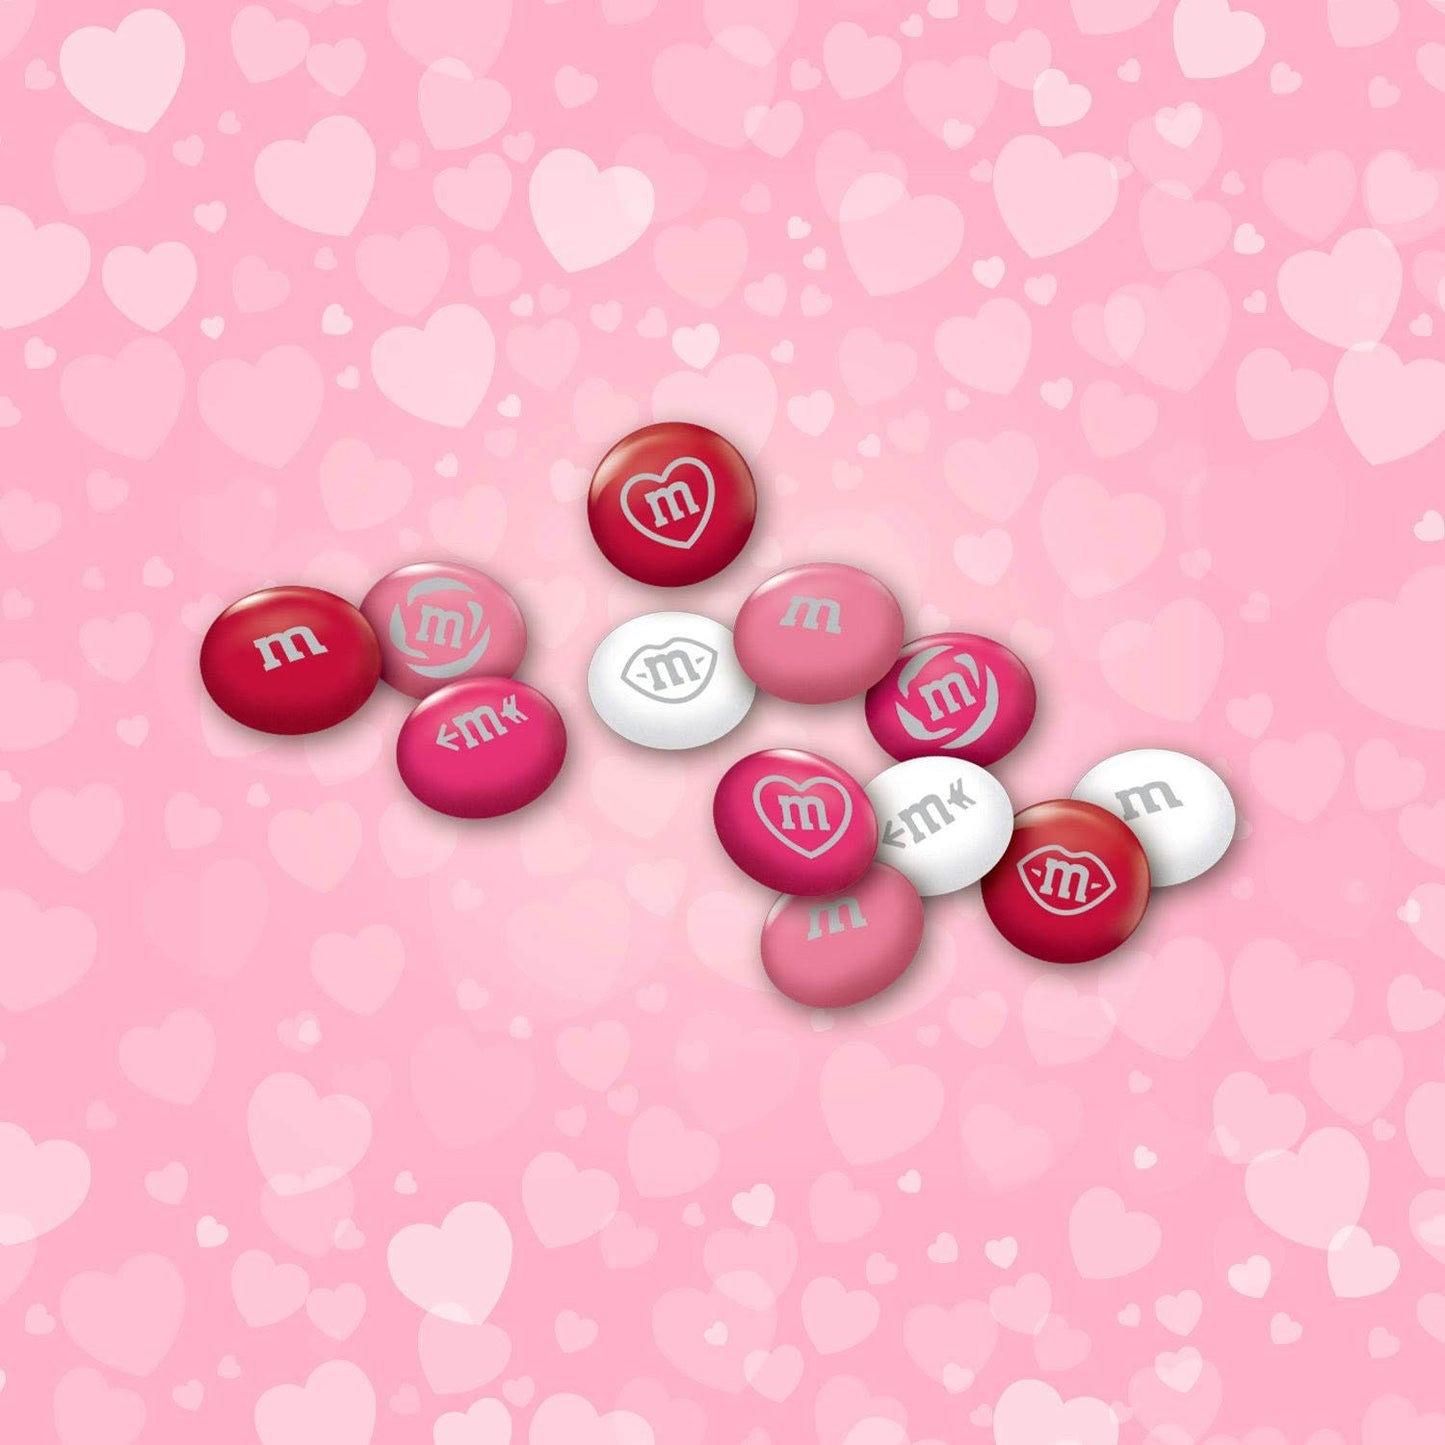 M&M's Valentine's Cupid's Mix Milk Chocolate Candies